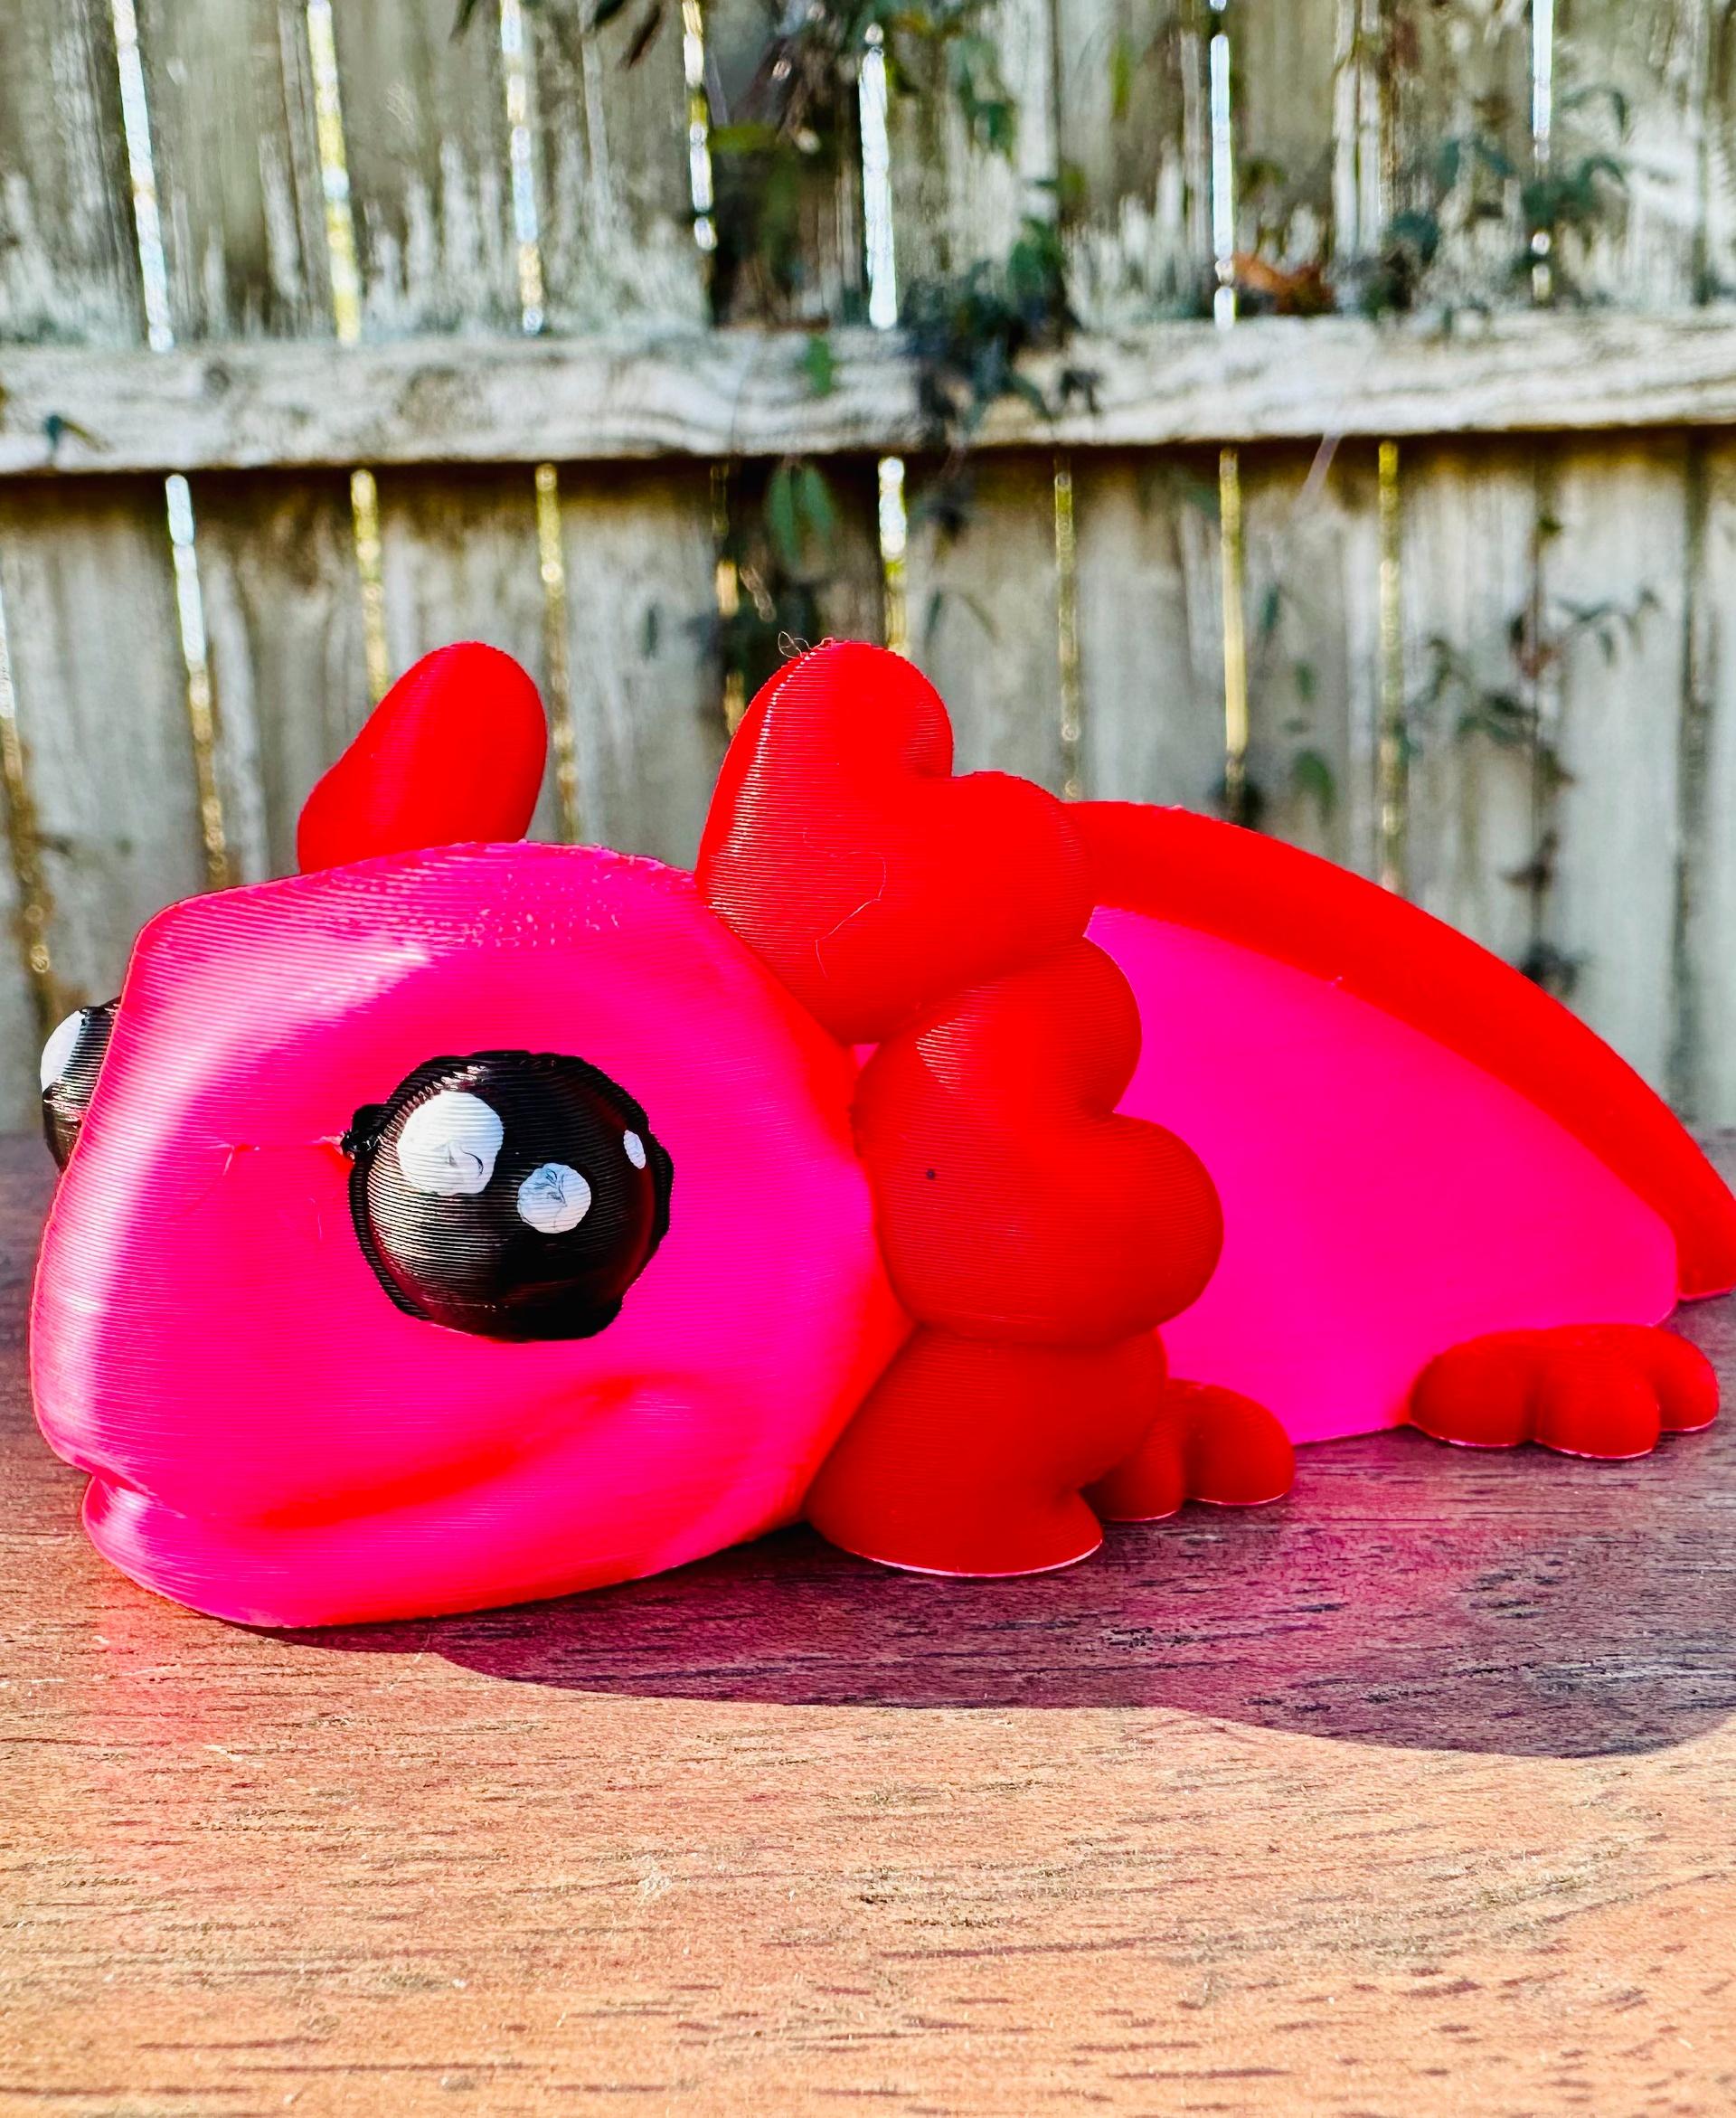 Alotl Love, Little Heart Axolotl  3d model